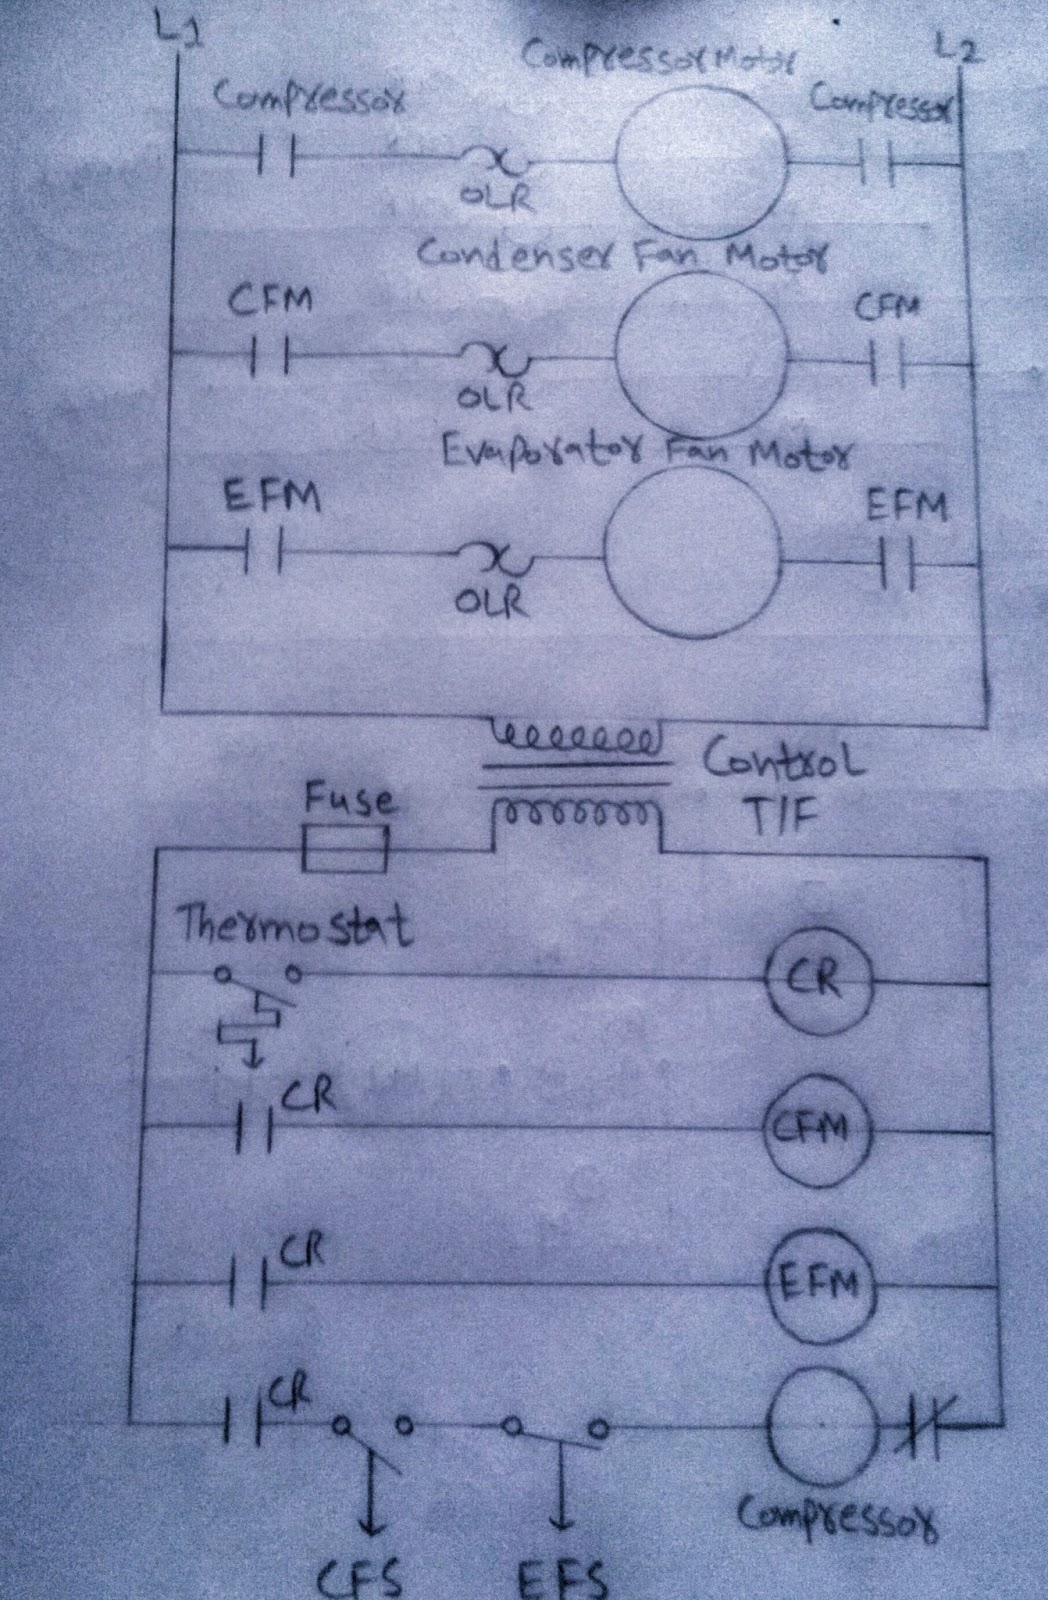 Circuit Diagram Of Air Flow System In Refrigerator